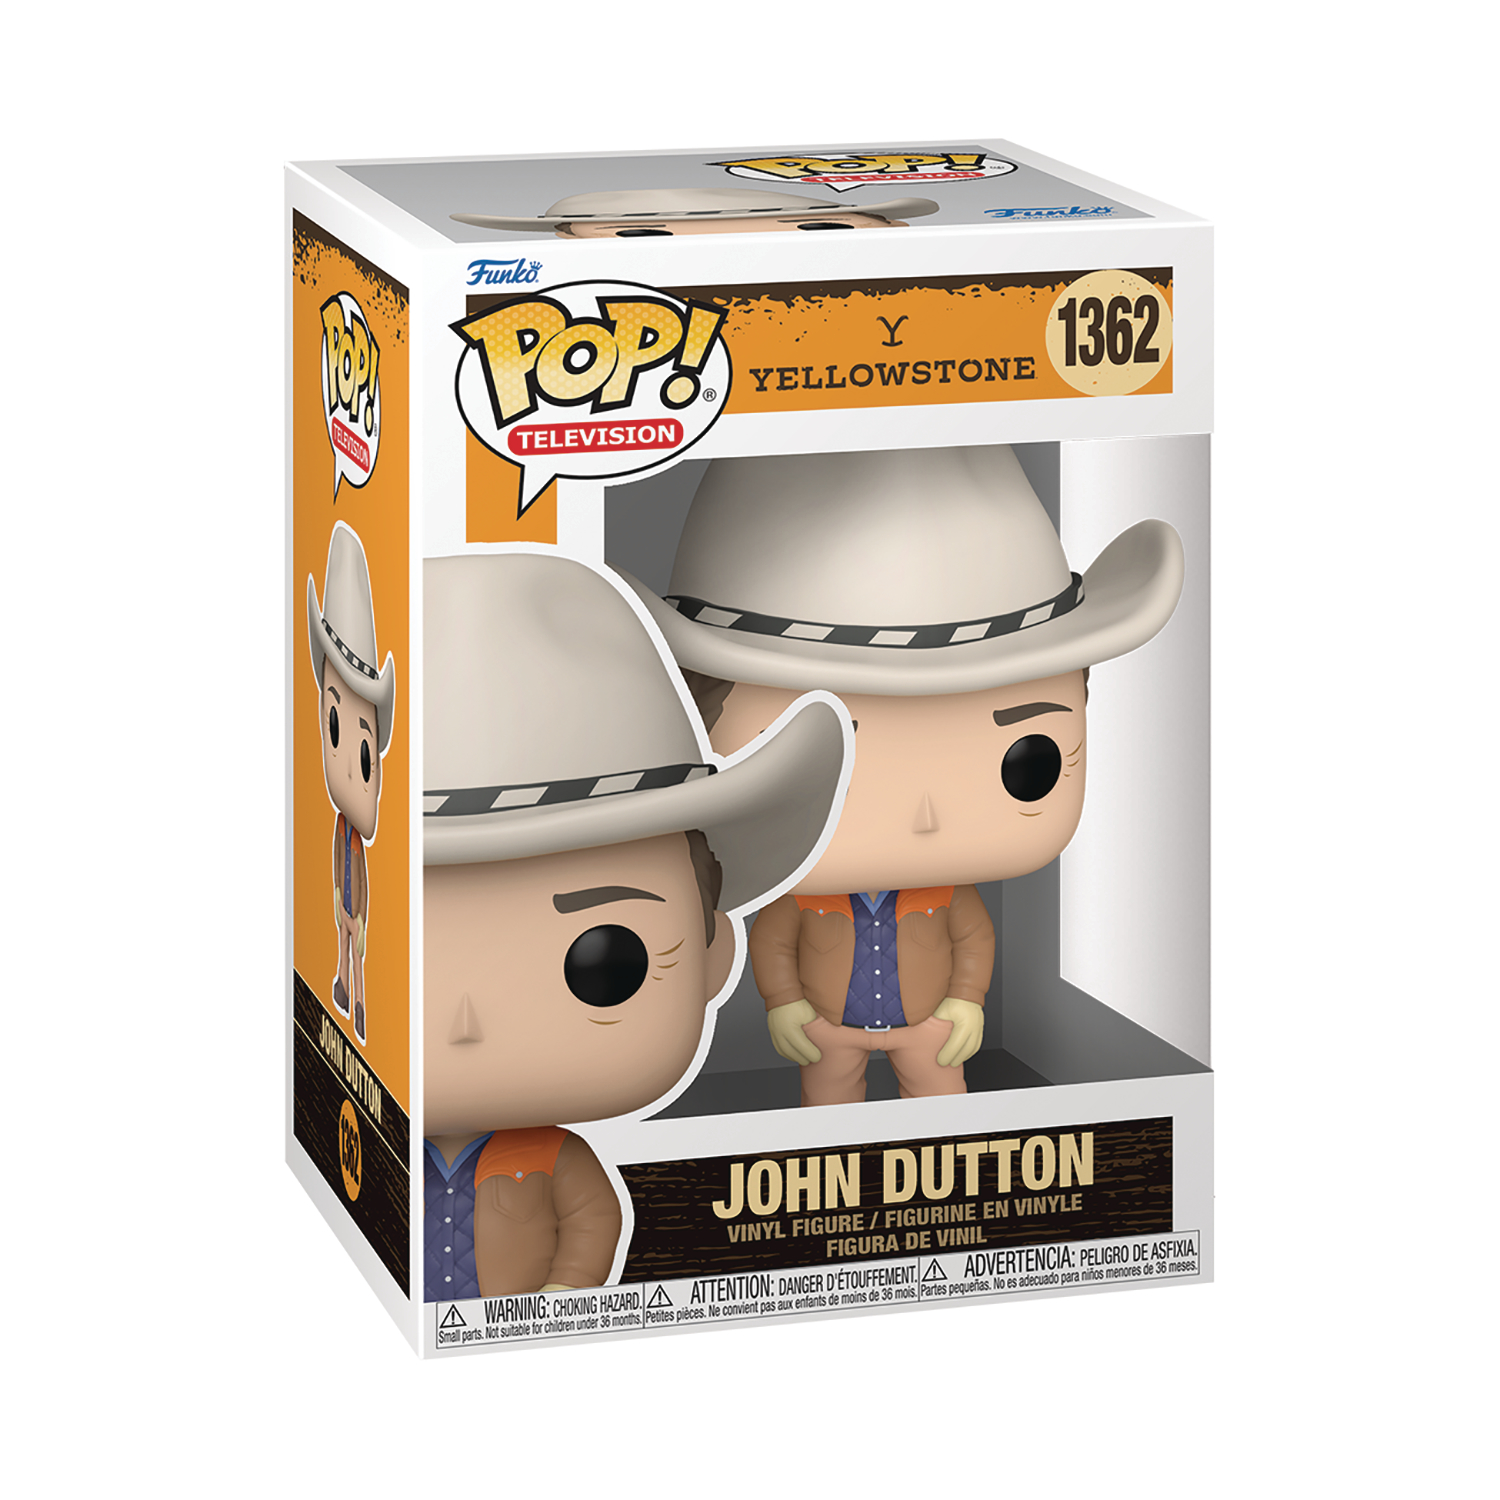 Pop TV Yellowstone John Dutton Vinyl Figure